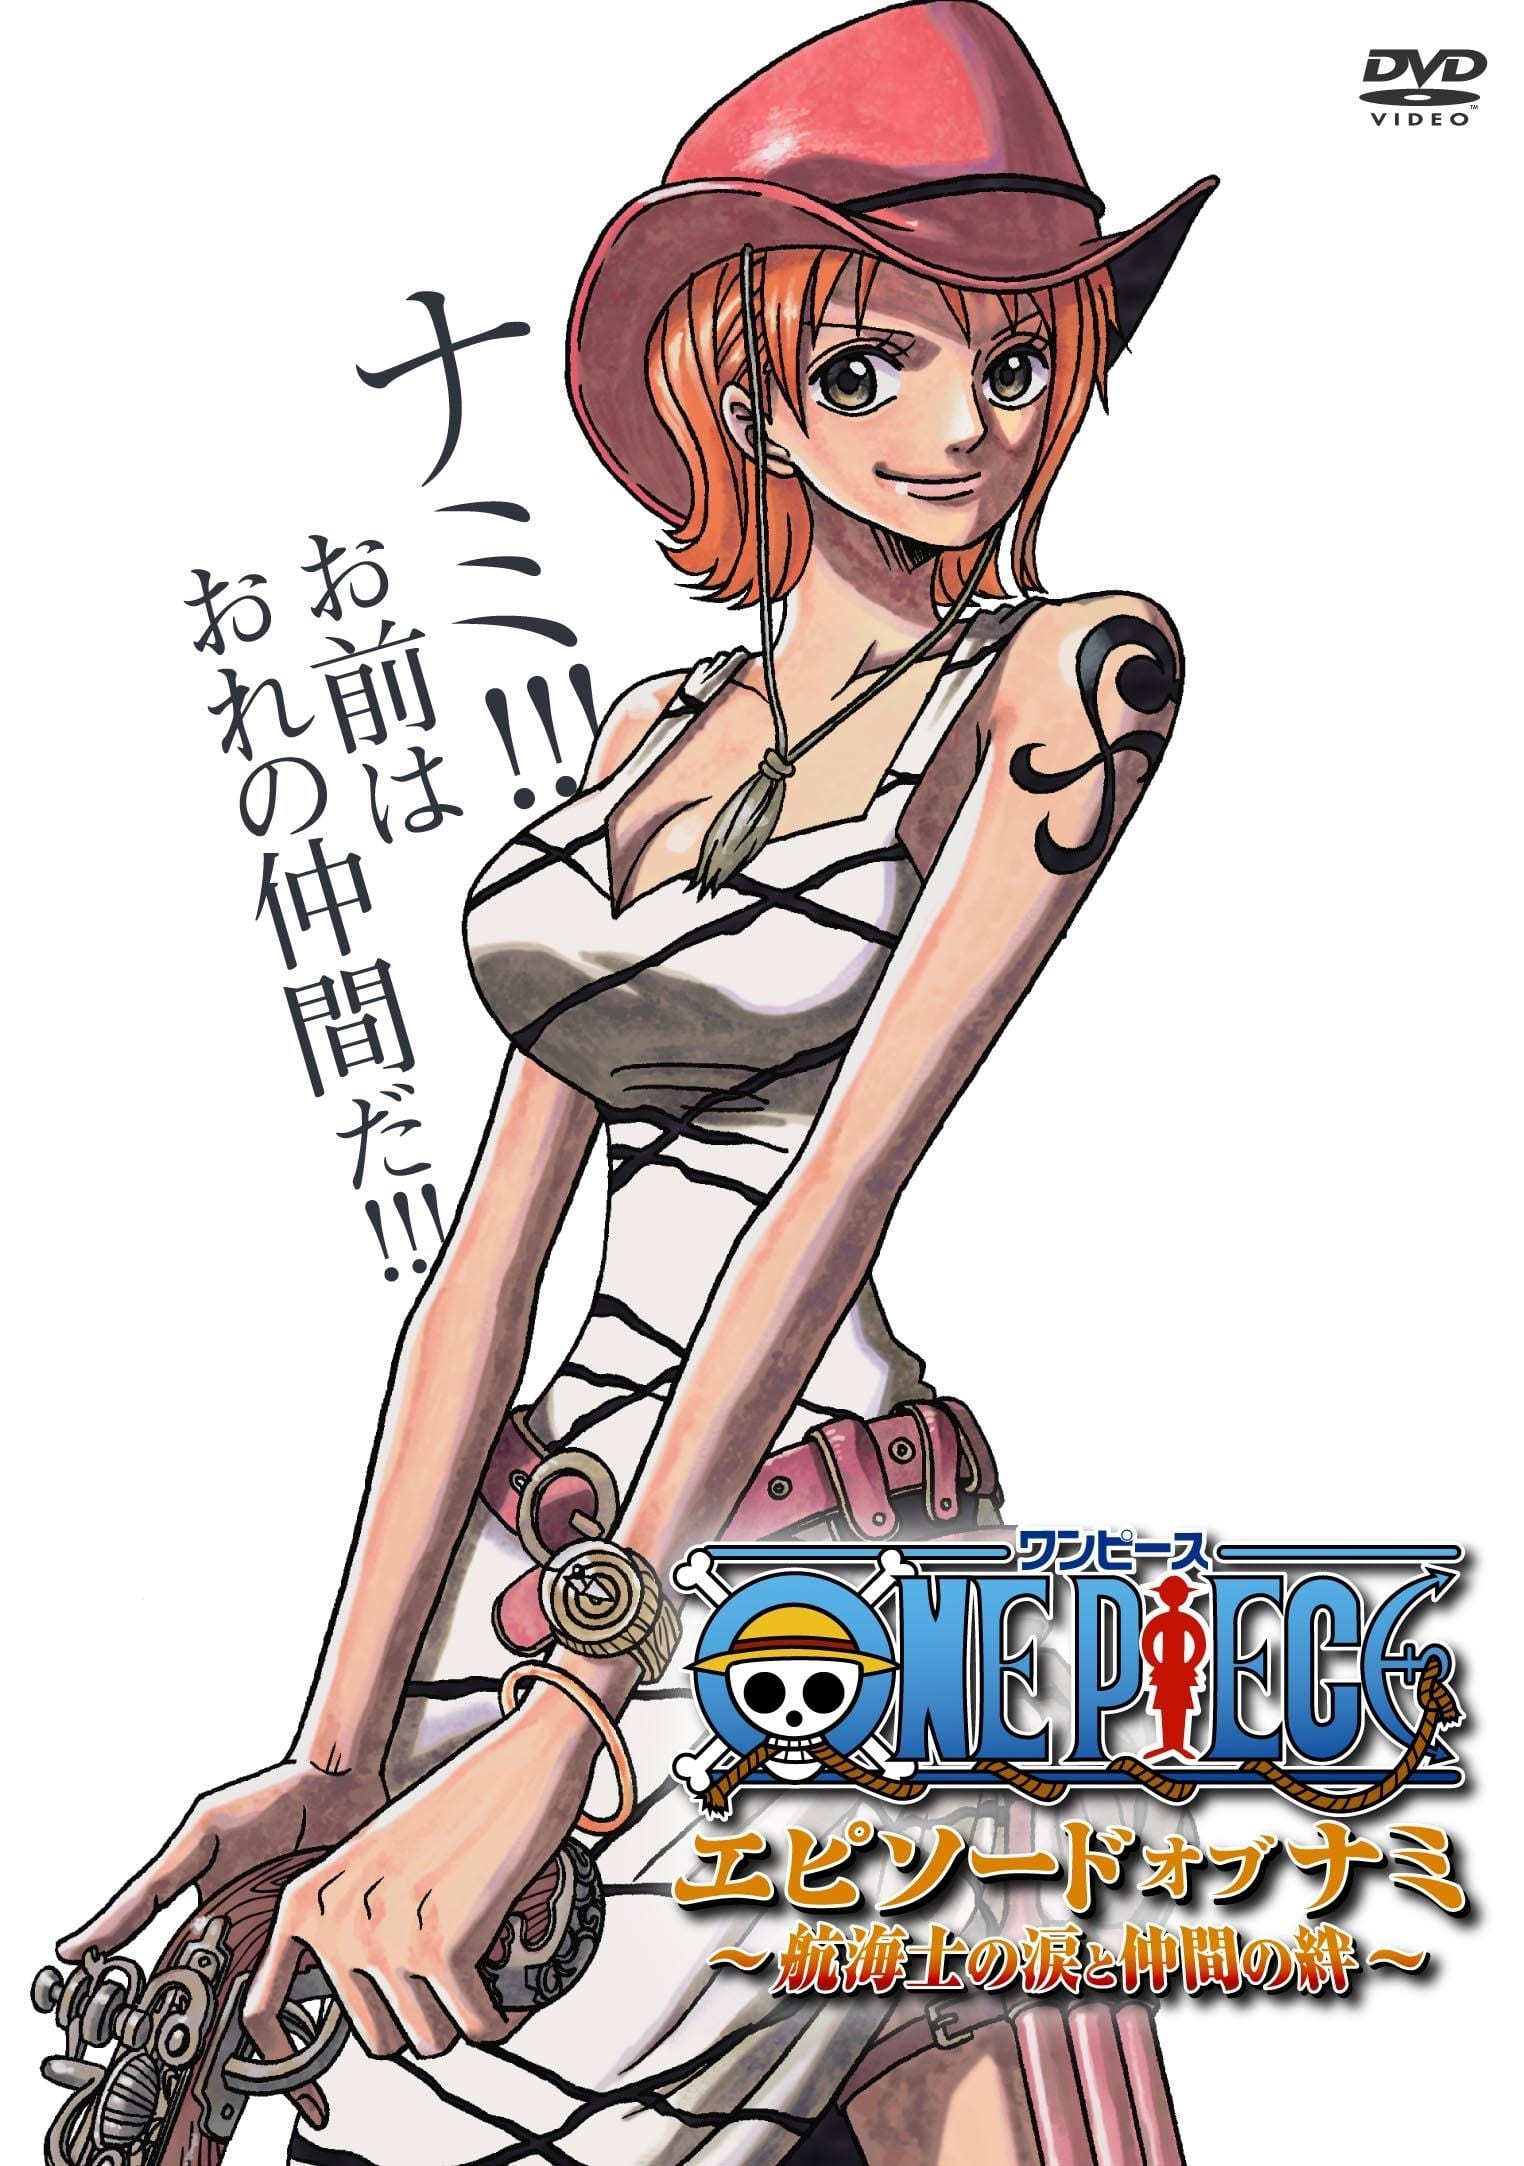 One Piece Episode of Nami